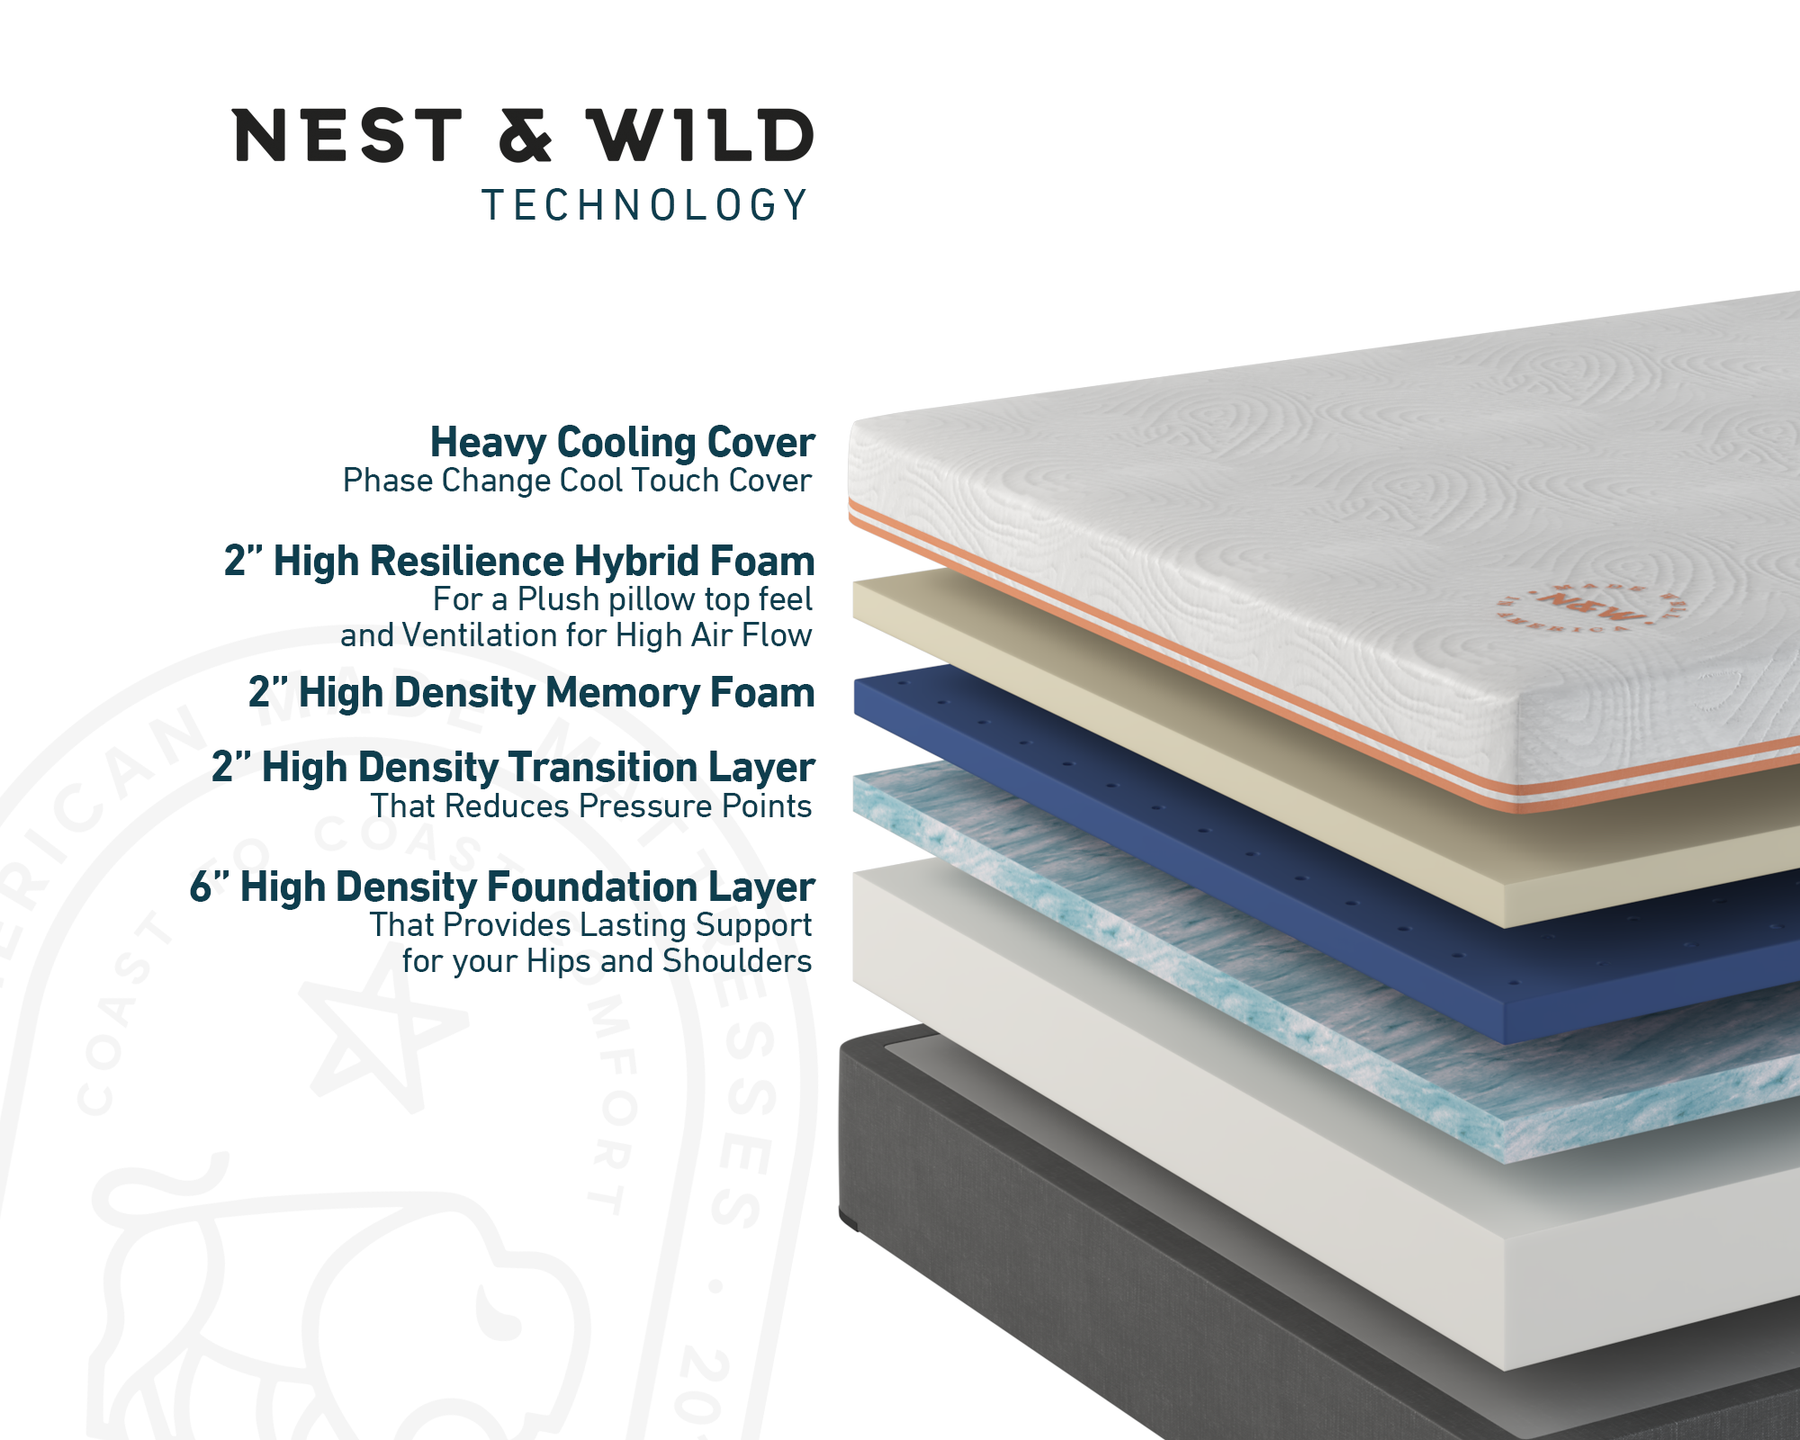 Nest & Wild Original Mattress